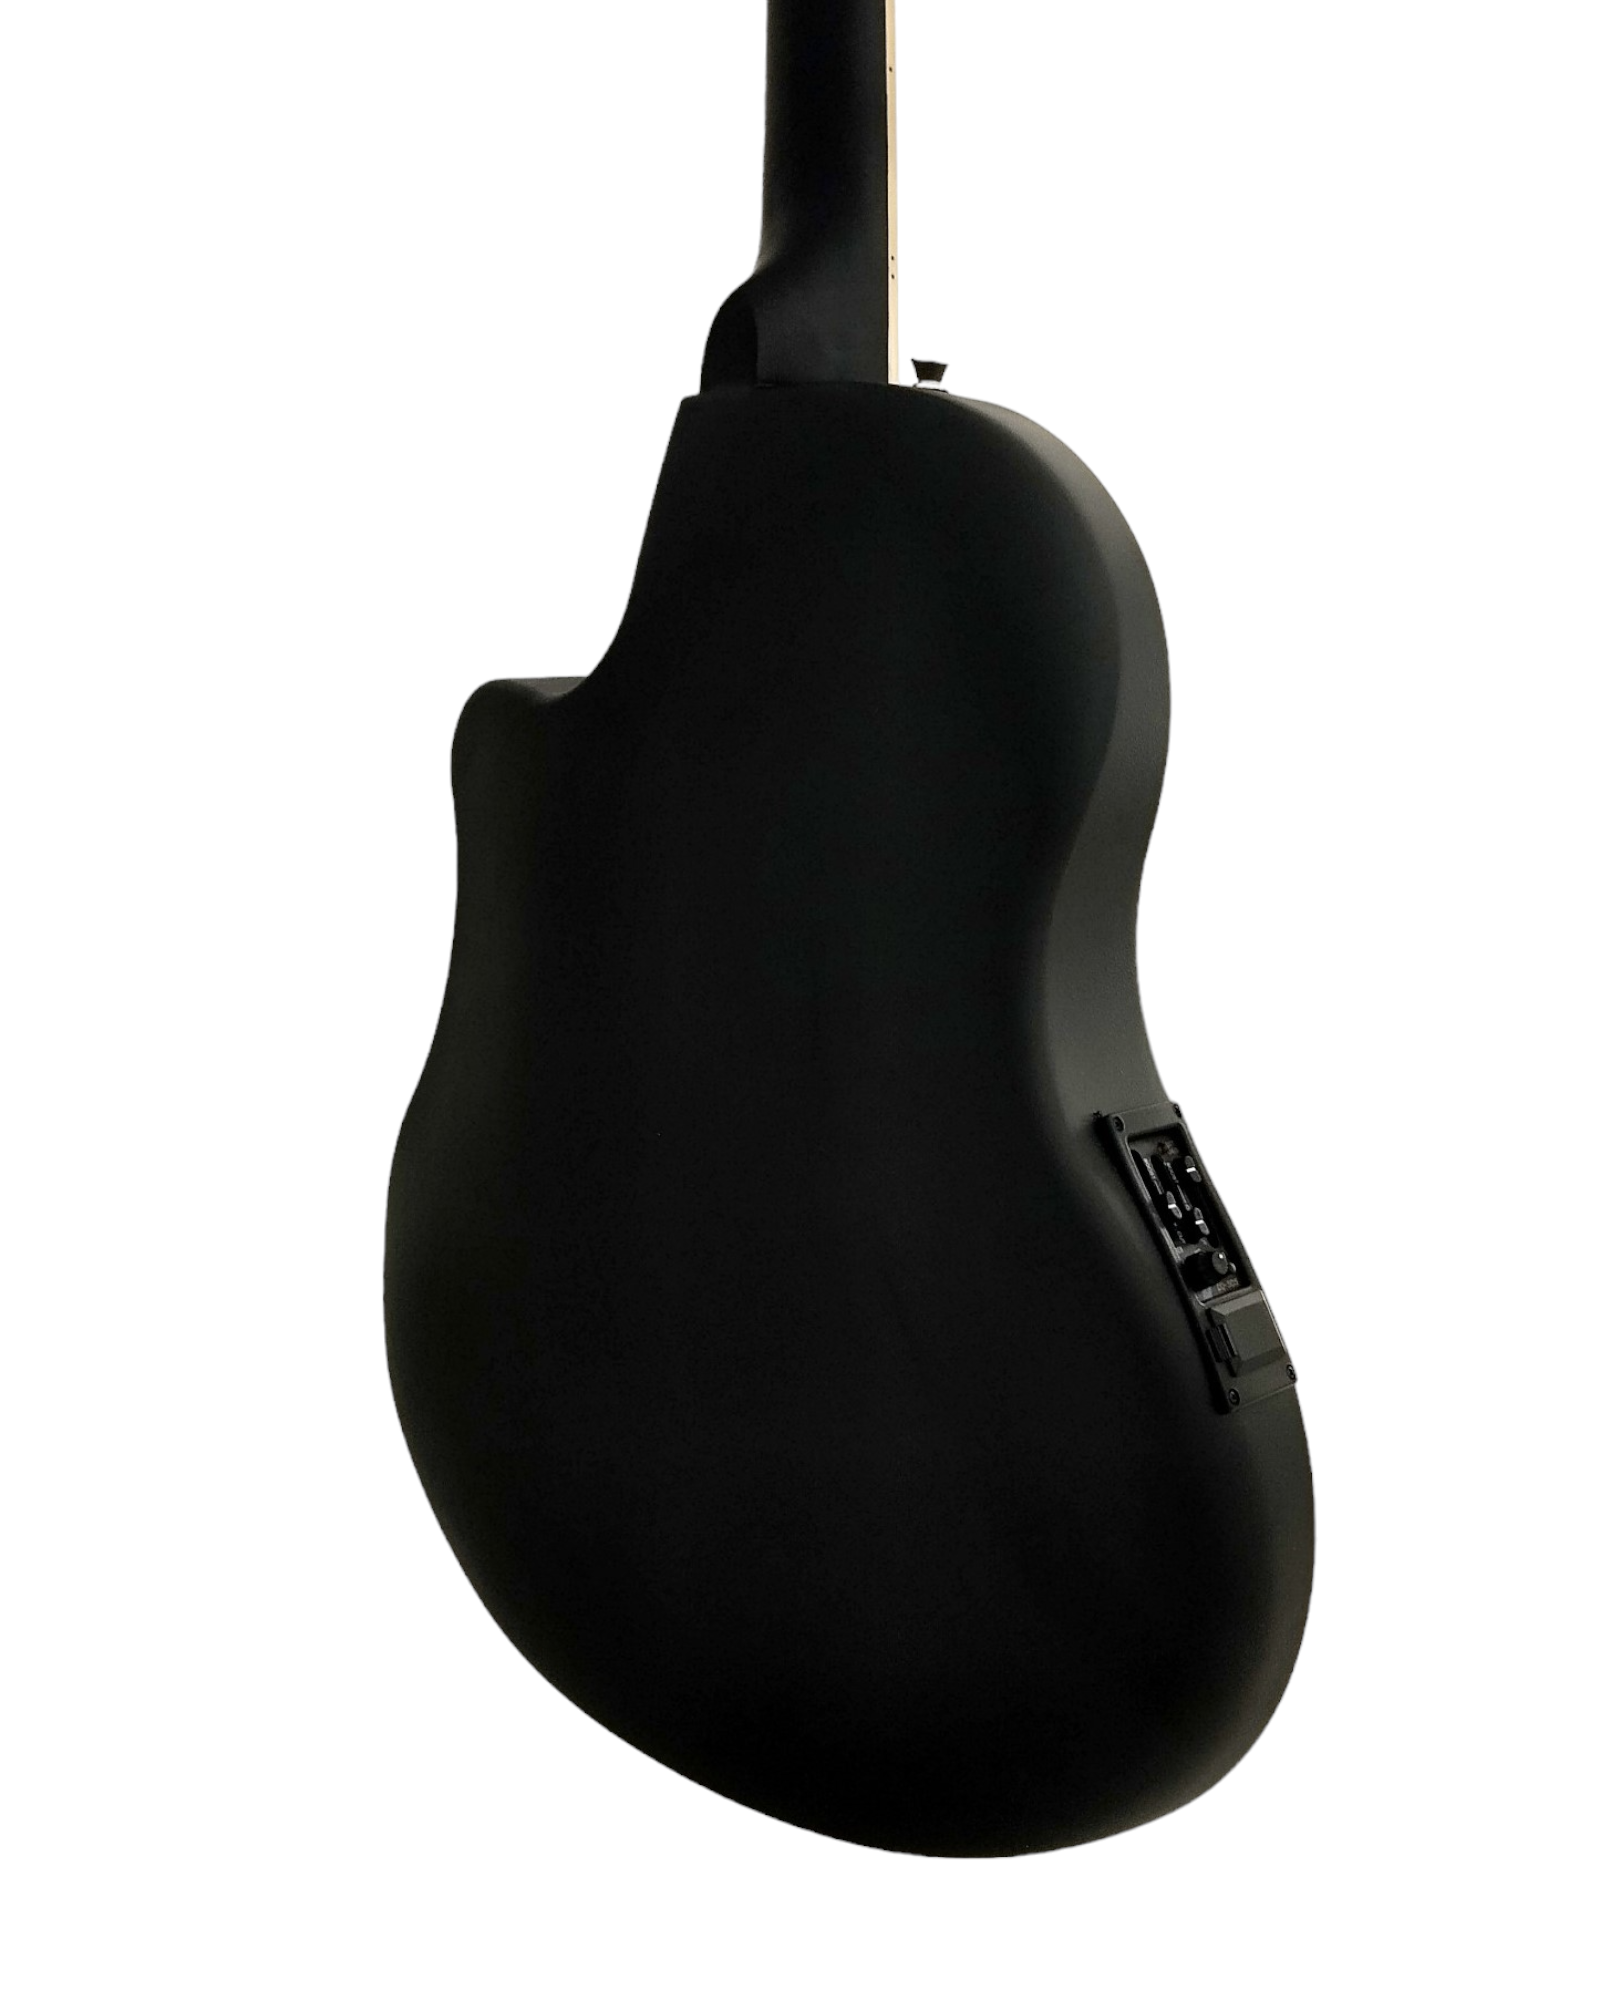 41 Caraya 721 CEQ/MBK Black Round-Back Electro-Acoustic Guitar+Free Gig  Bag